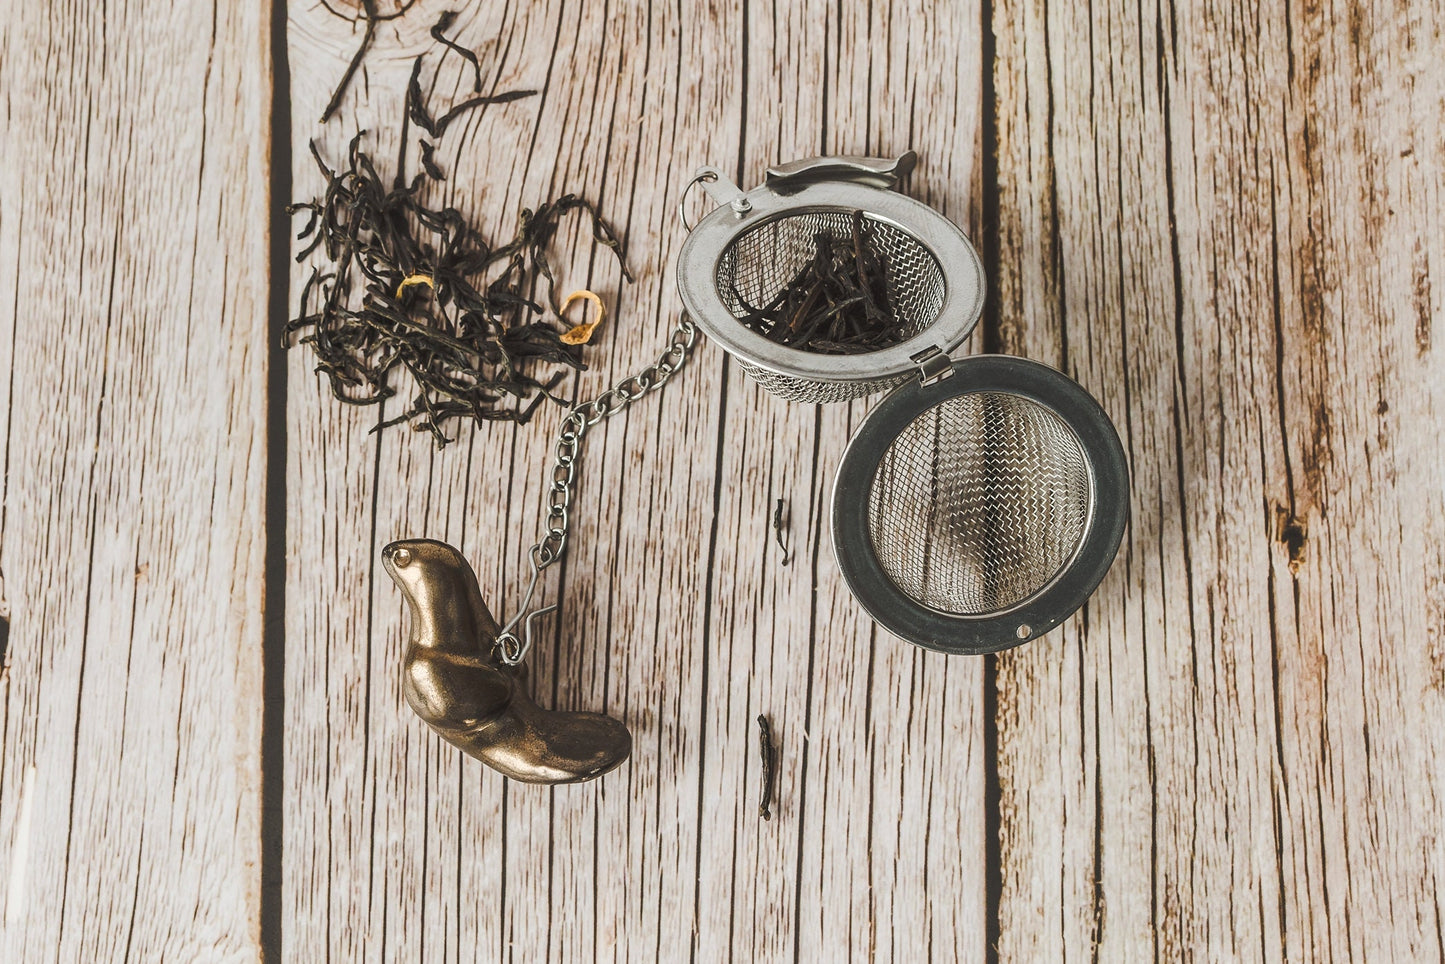 Loose leaf tea strainer with ceramic bird - Tea infuser with bronze bird - Herbal tea steeper - Christmas gift - Easter gift